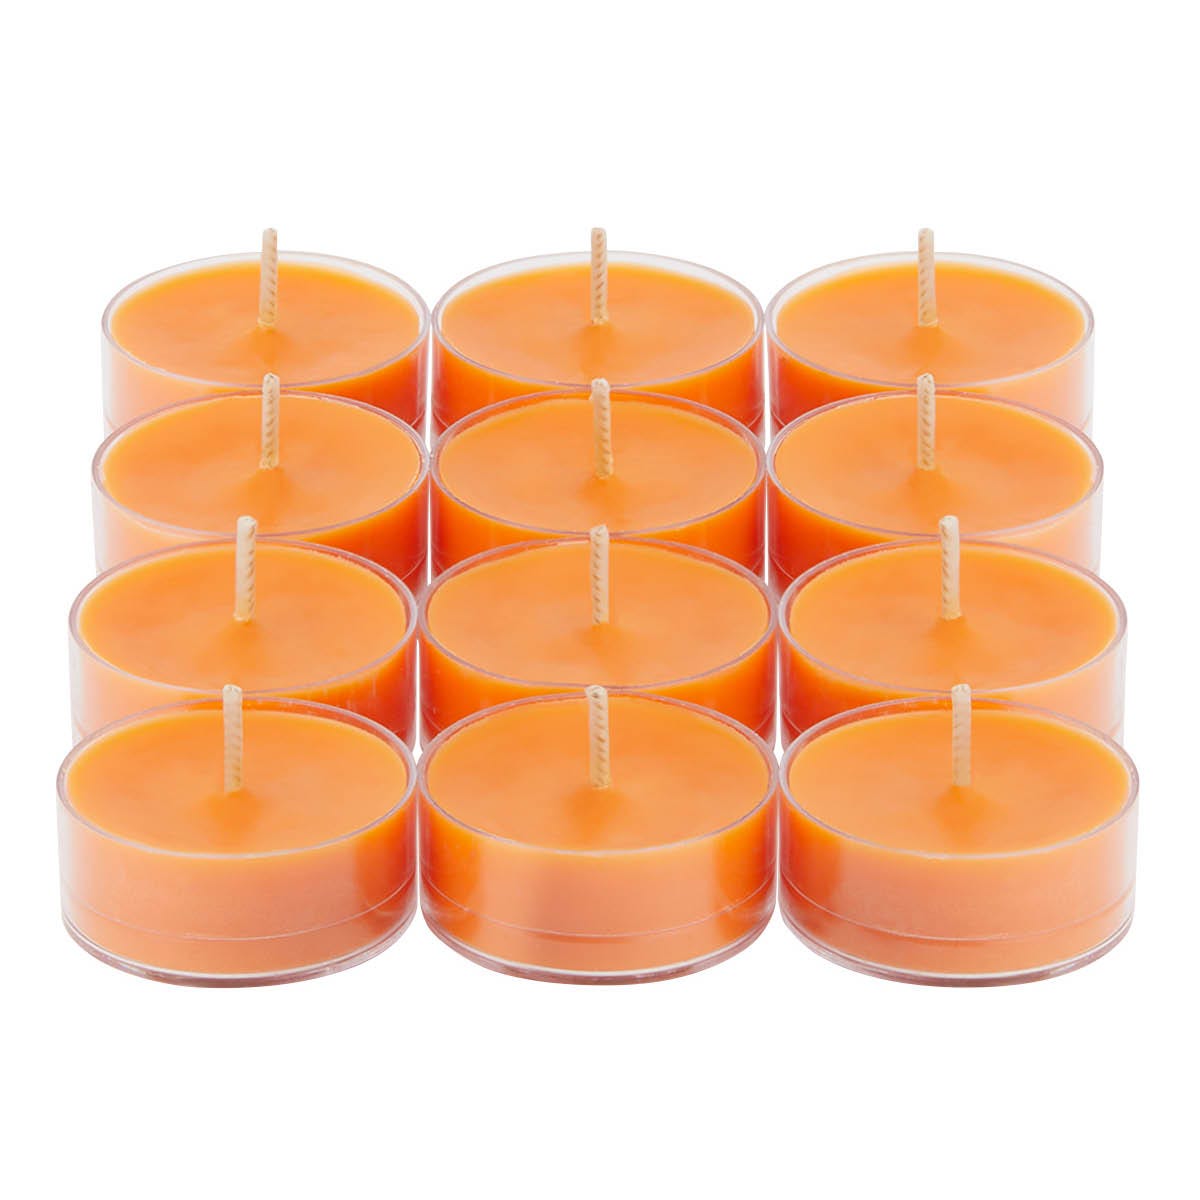 Apricot Peach Preserve Universal Tealight Candles